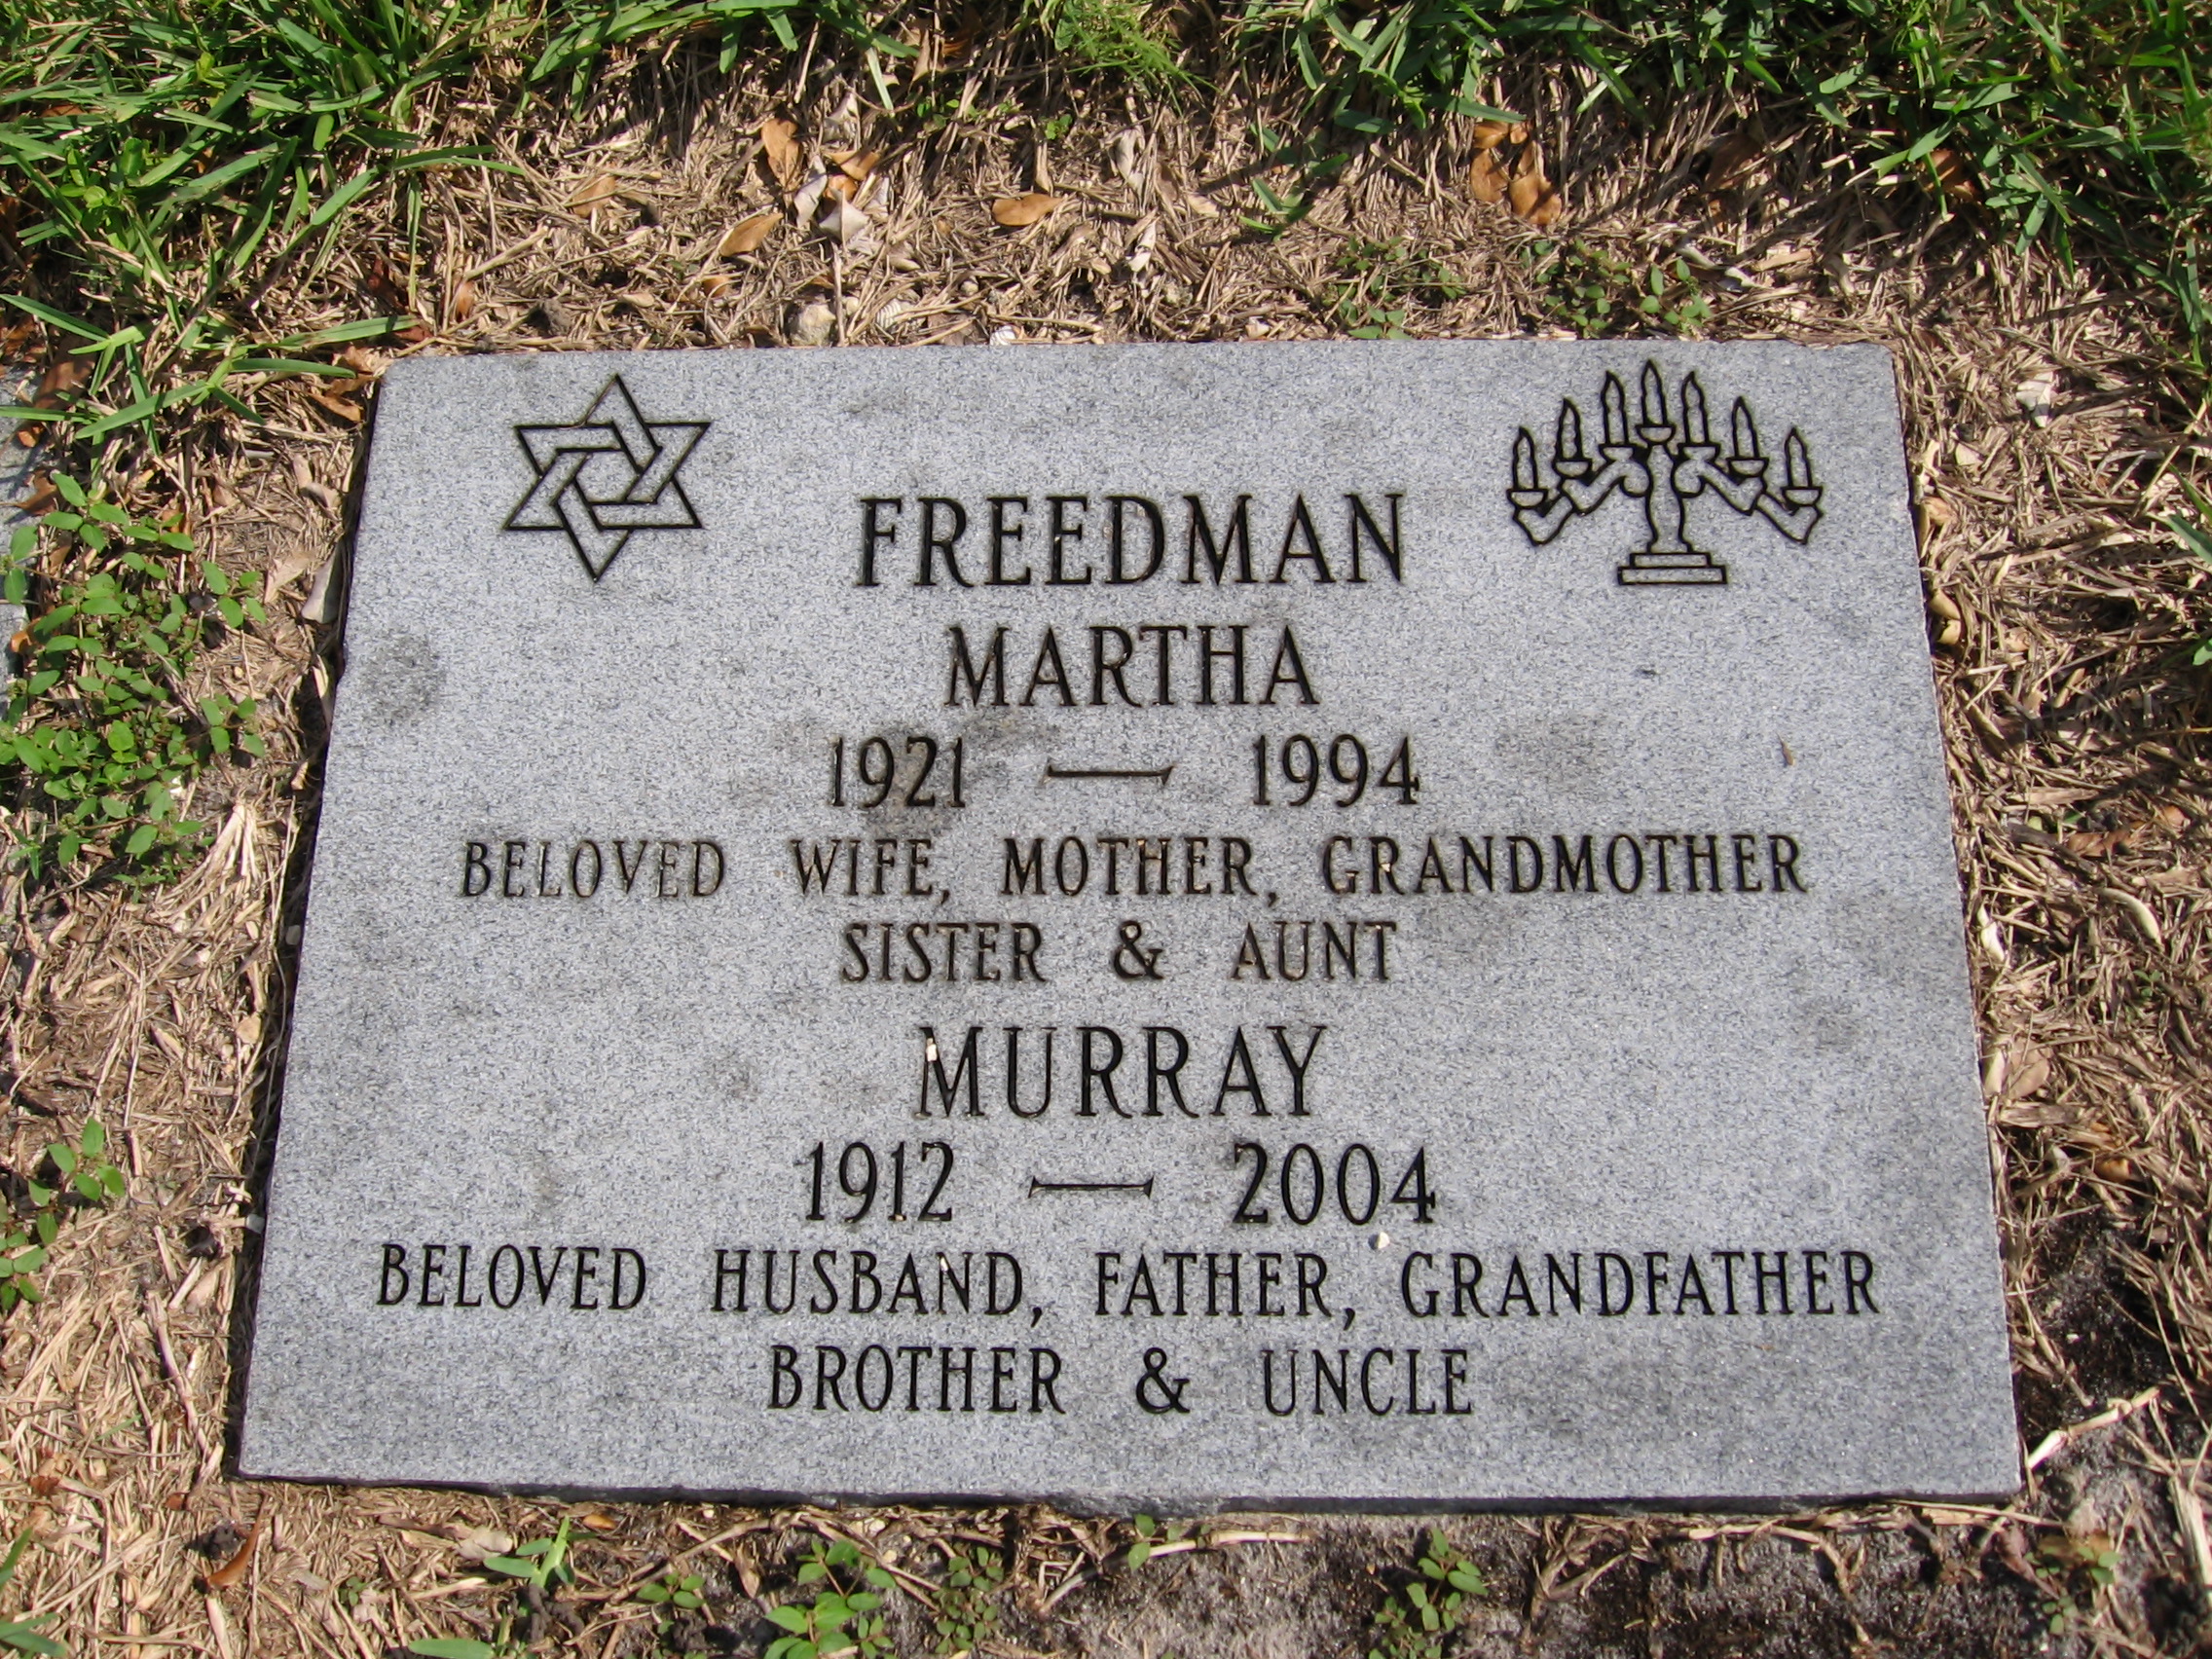 Murray Freedman